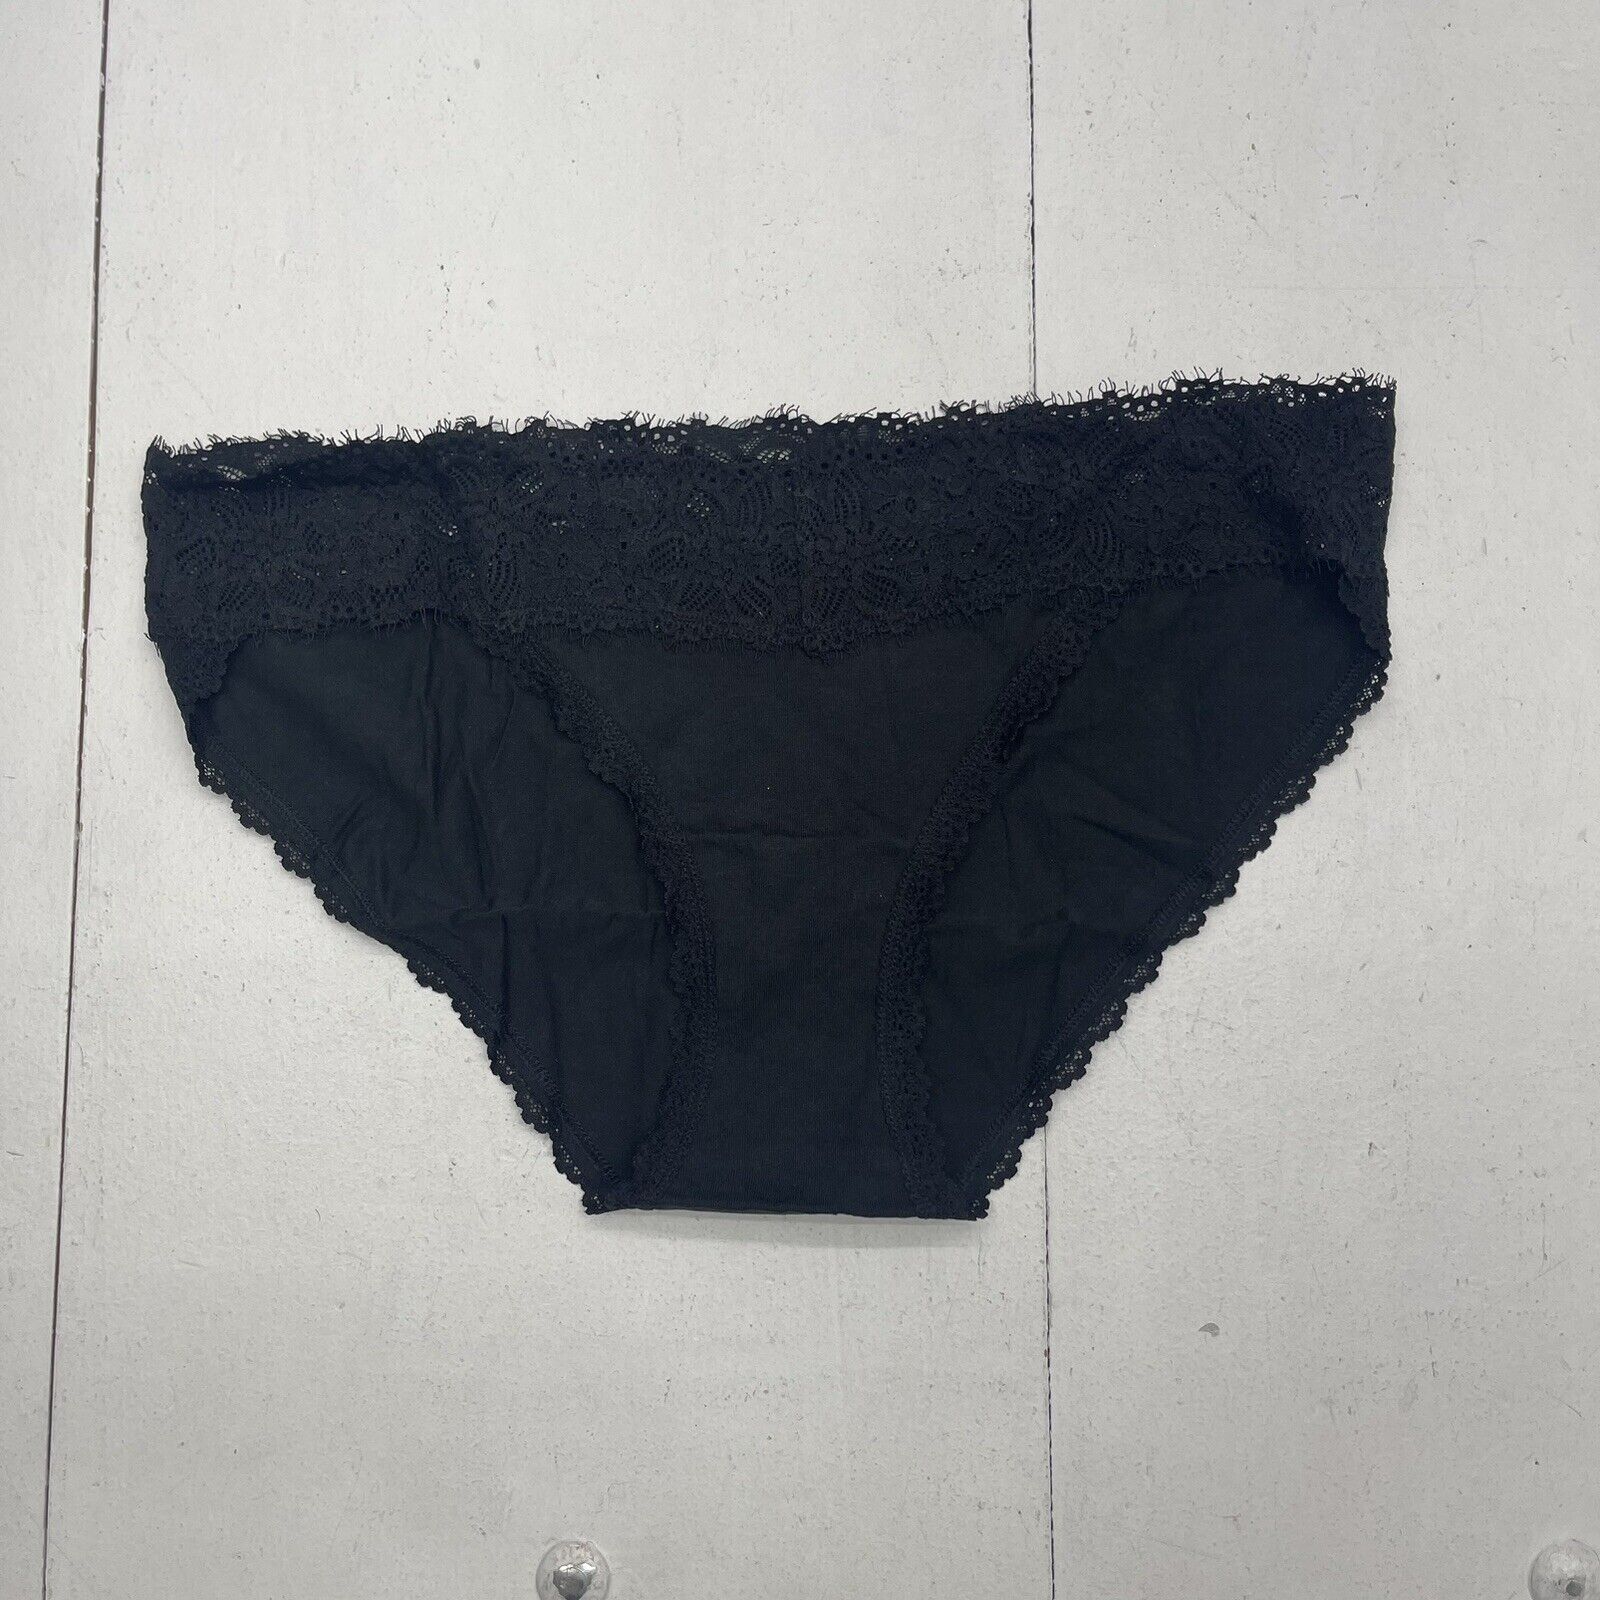 Aerie Black Lace Trim Cheeky Underwear Women's Size Large New